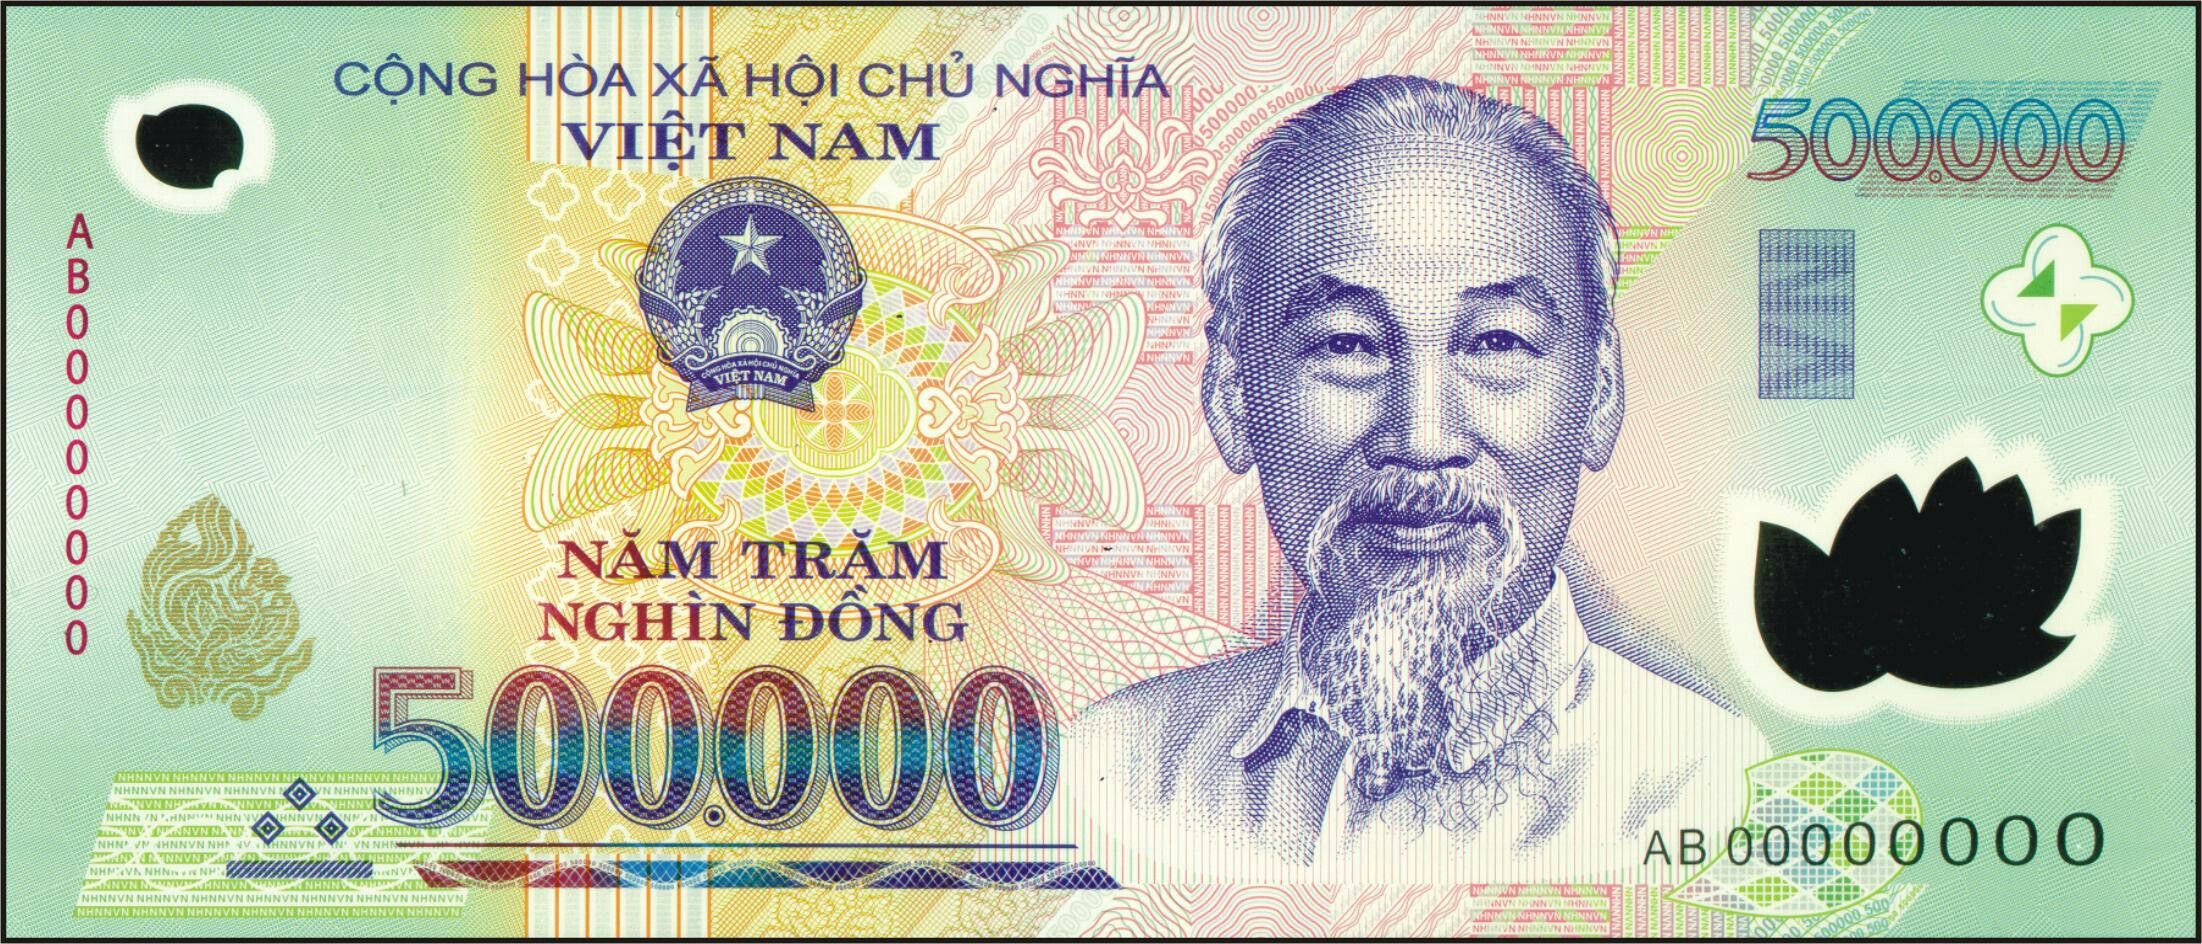 Currency in Vietnam